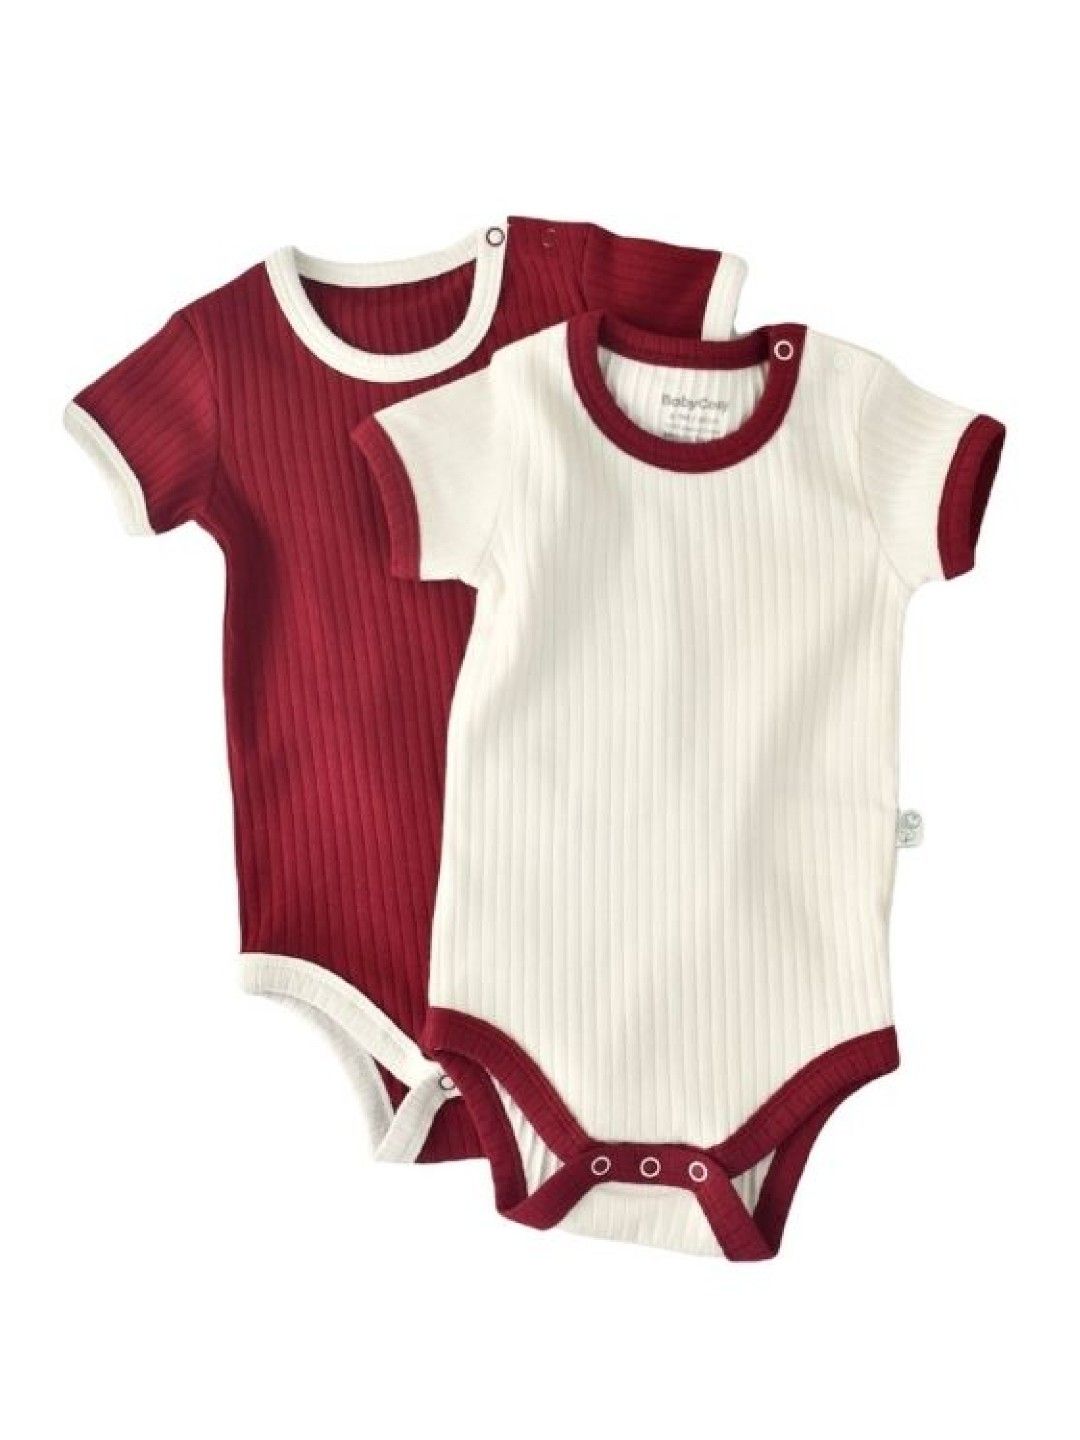 bean fashion Babycosy Organic Shortsleeves Bodysuit Set of 2 (Creamy White & Red- Image 1)